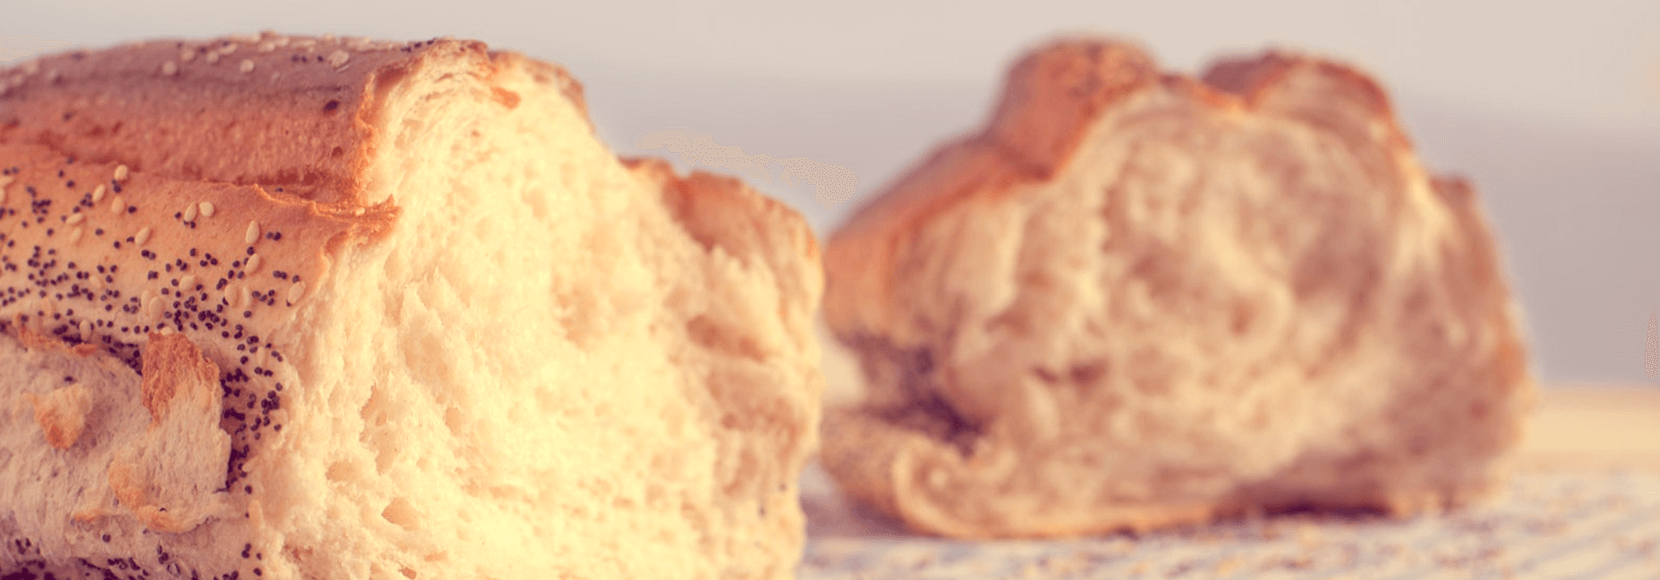 Levapan bread image